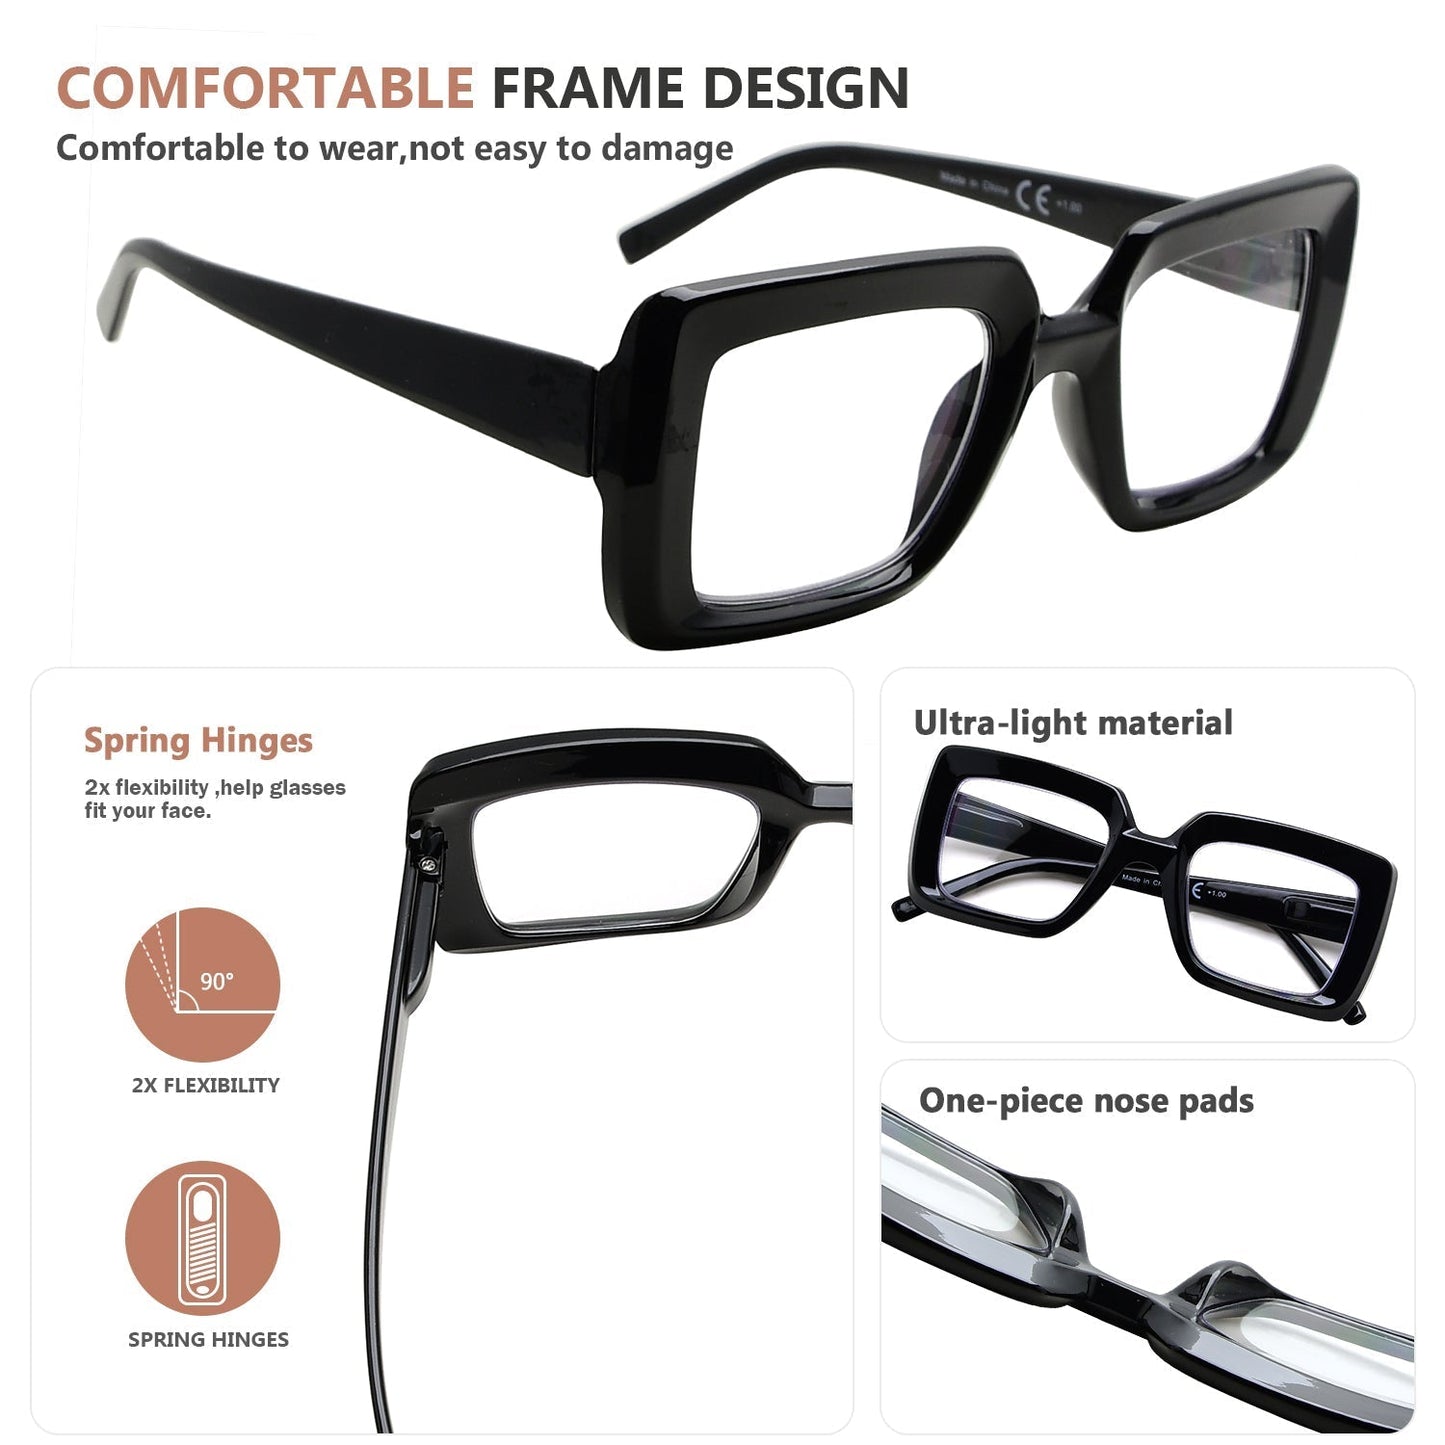 5 Pack Funky Reading Glasses Trendy Readers R2101